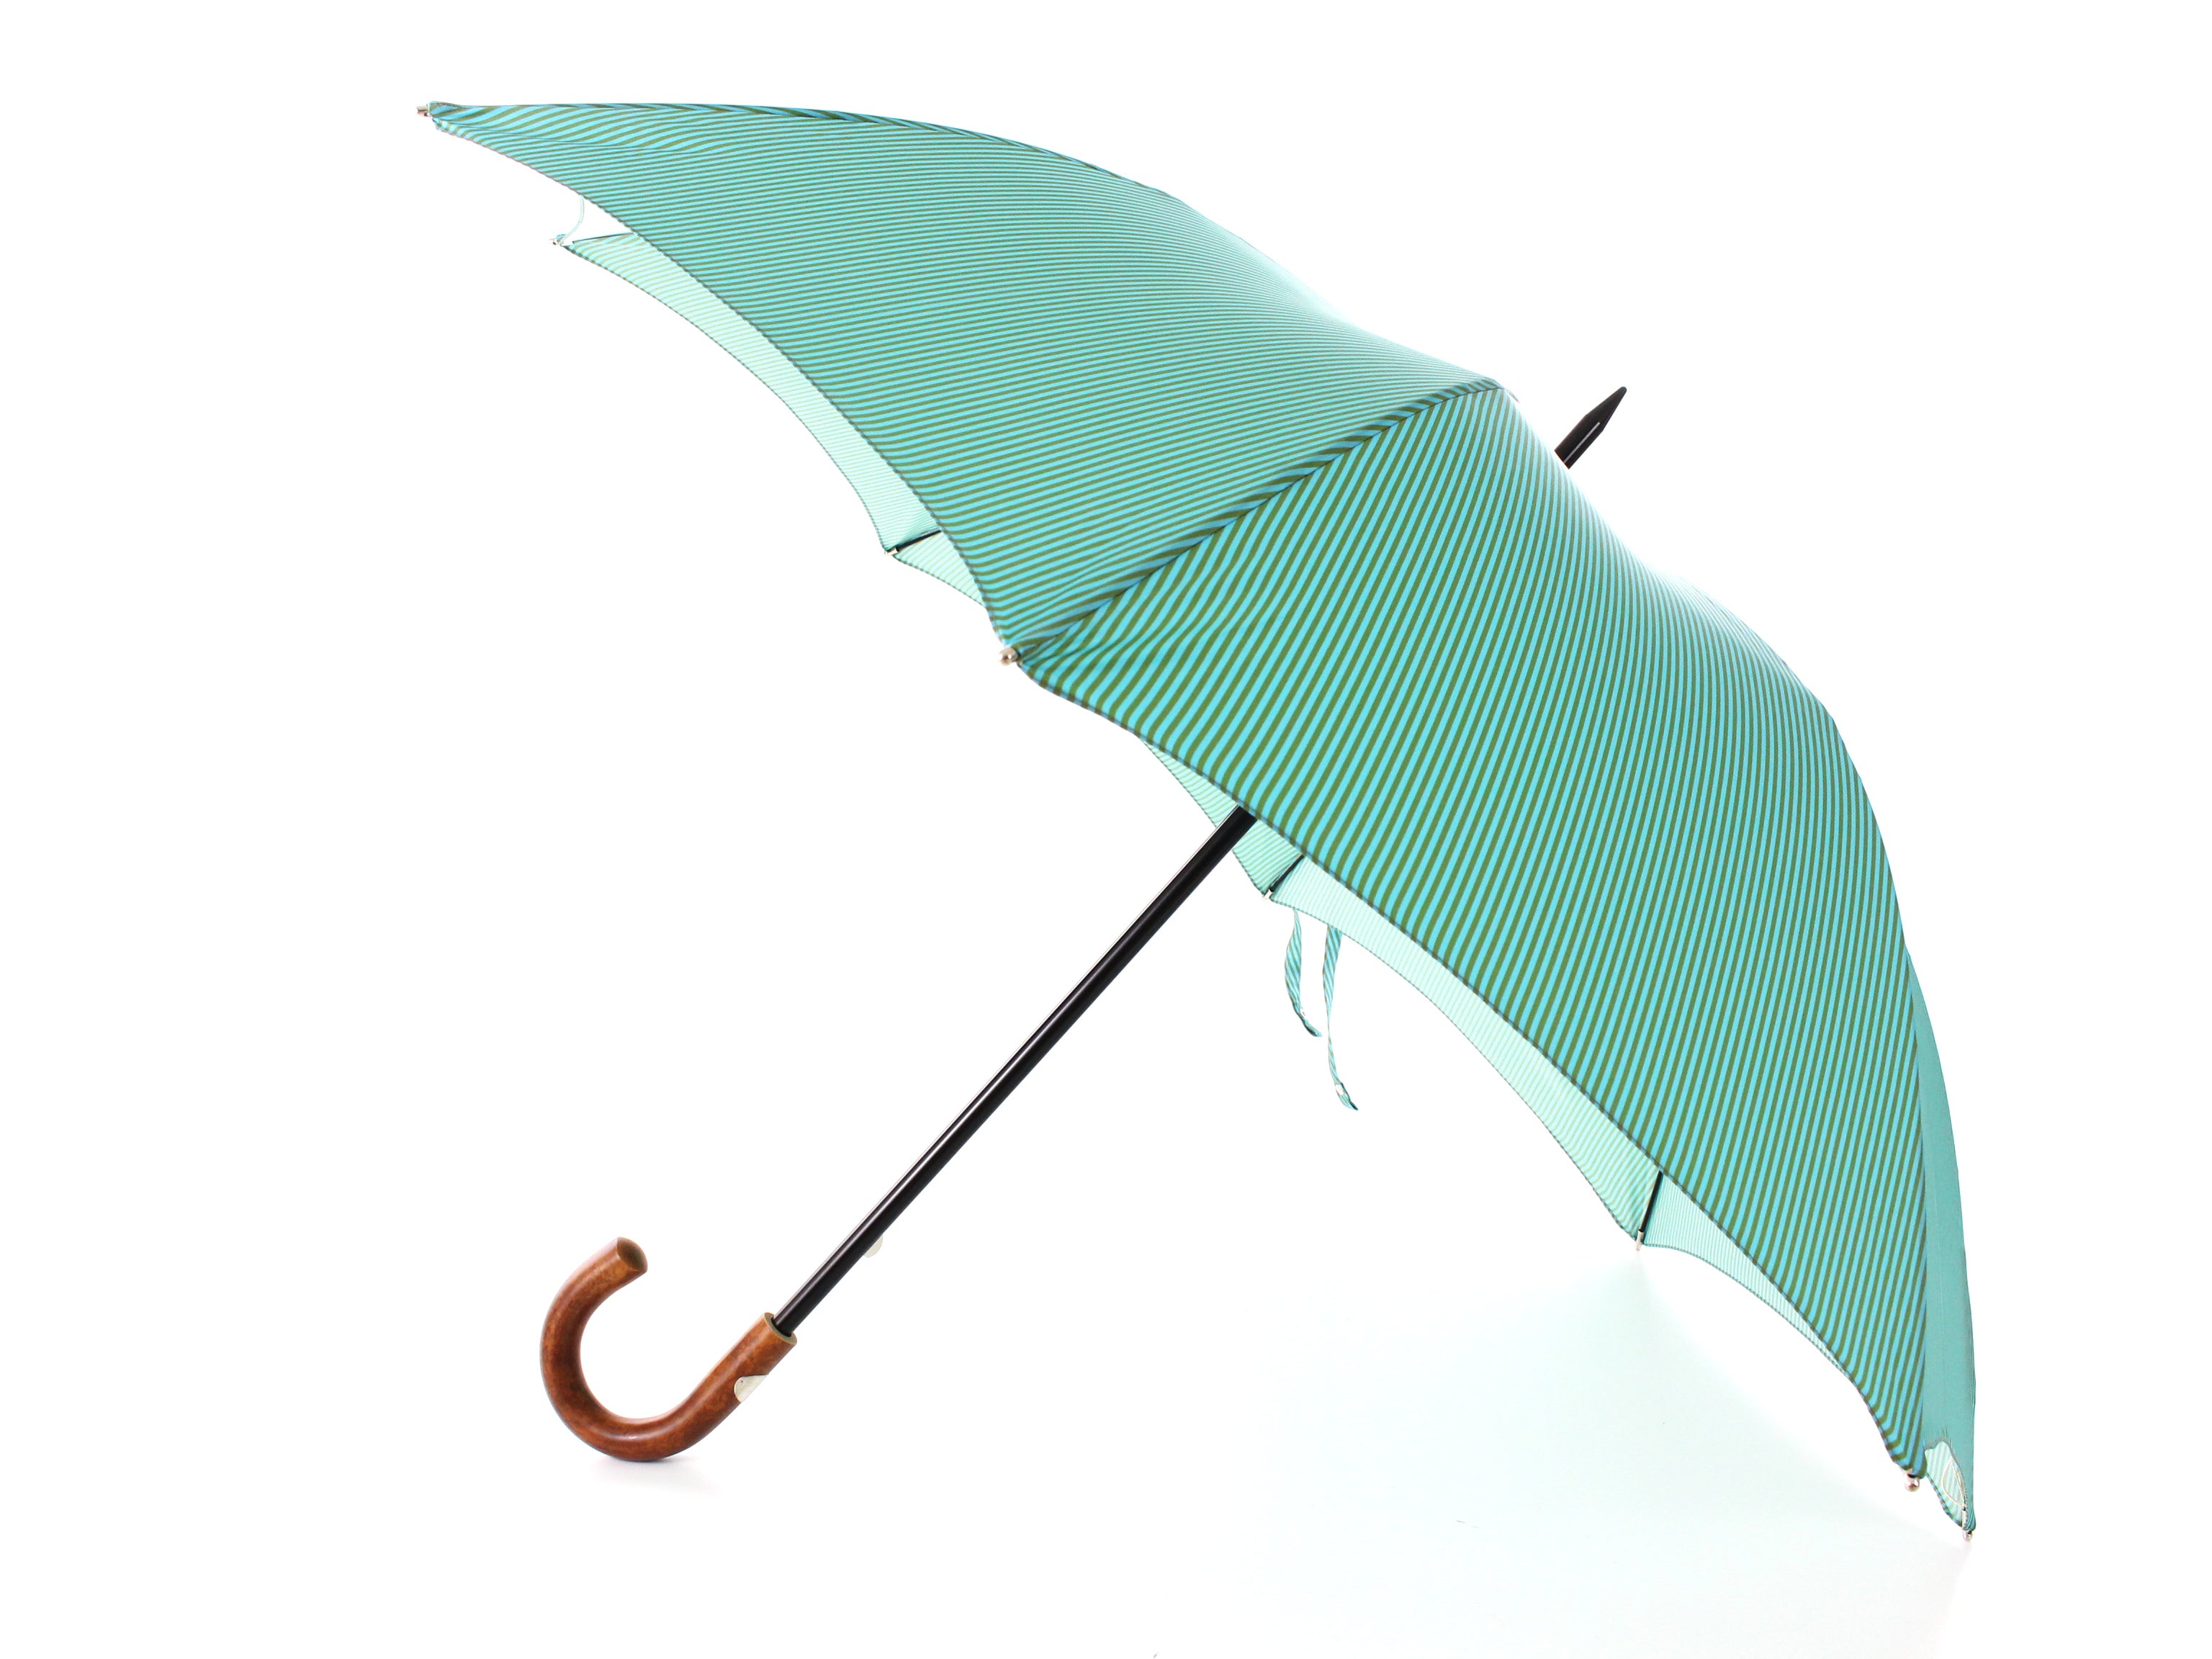 Umbrella fox67 malacca5332 aquamarine / green